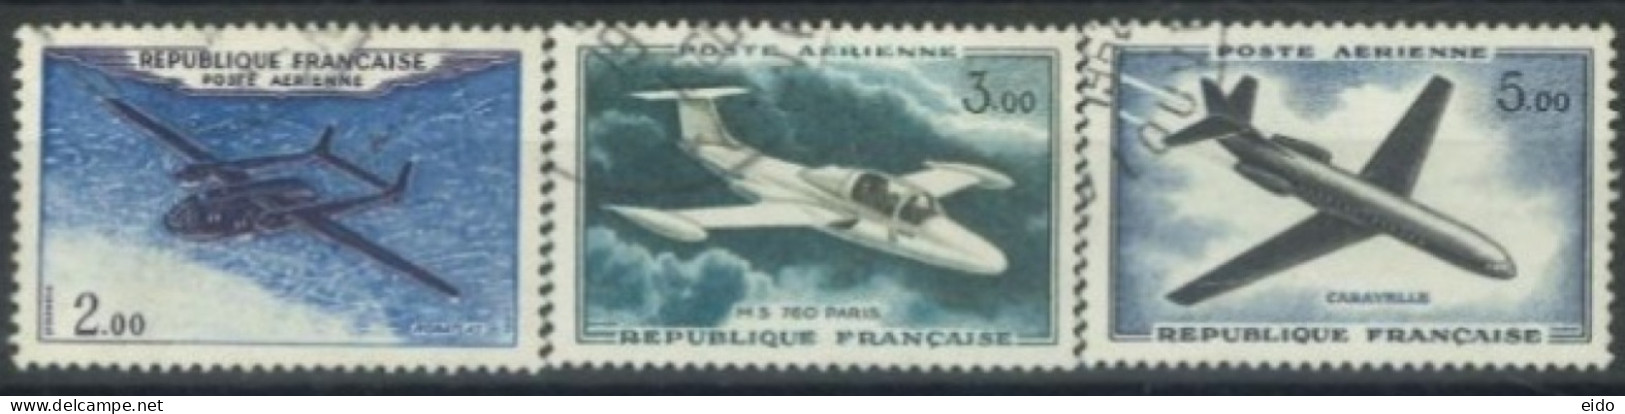 FRANCE - 1960/64 - AIR PLANES STAMPS SET OF 3, USED - Oblitérés